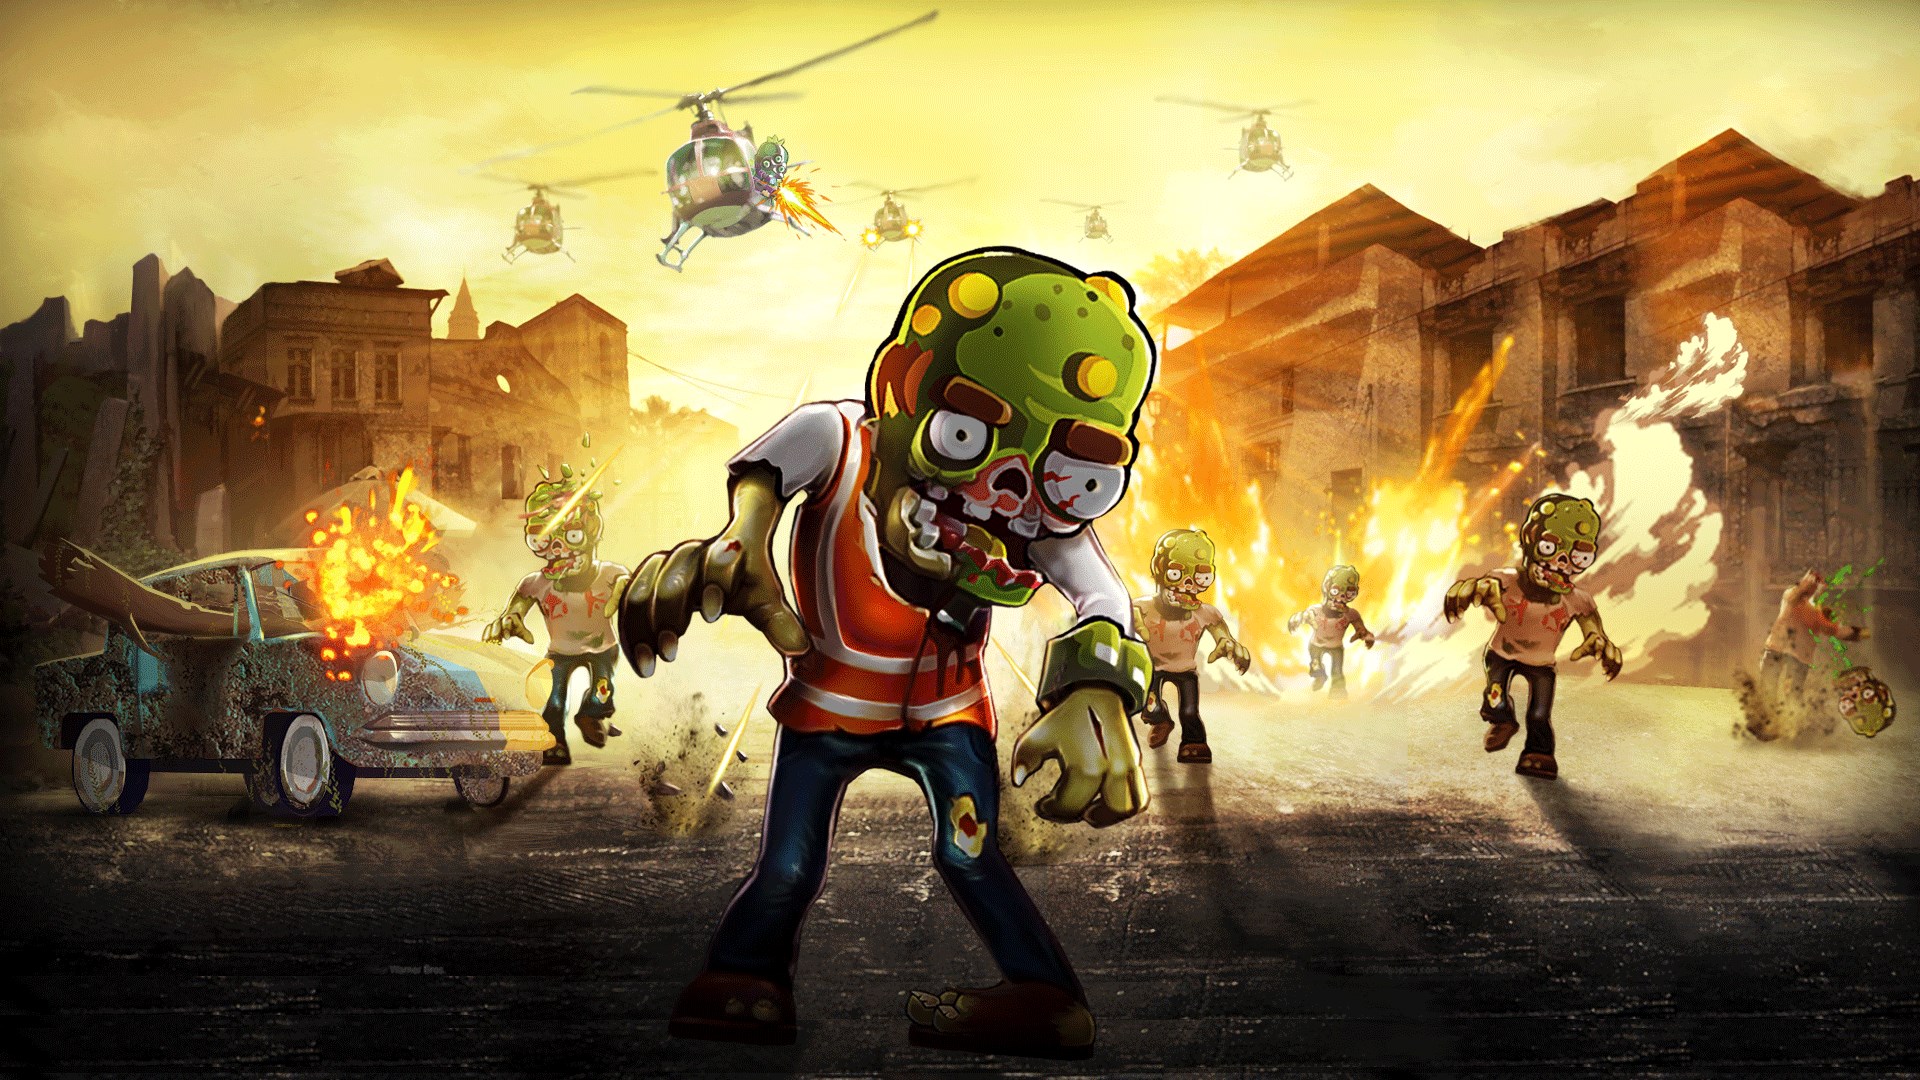 Plants Vs Zombies Battle For Neighborville PC Windows Family Kids Computer  Game